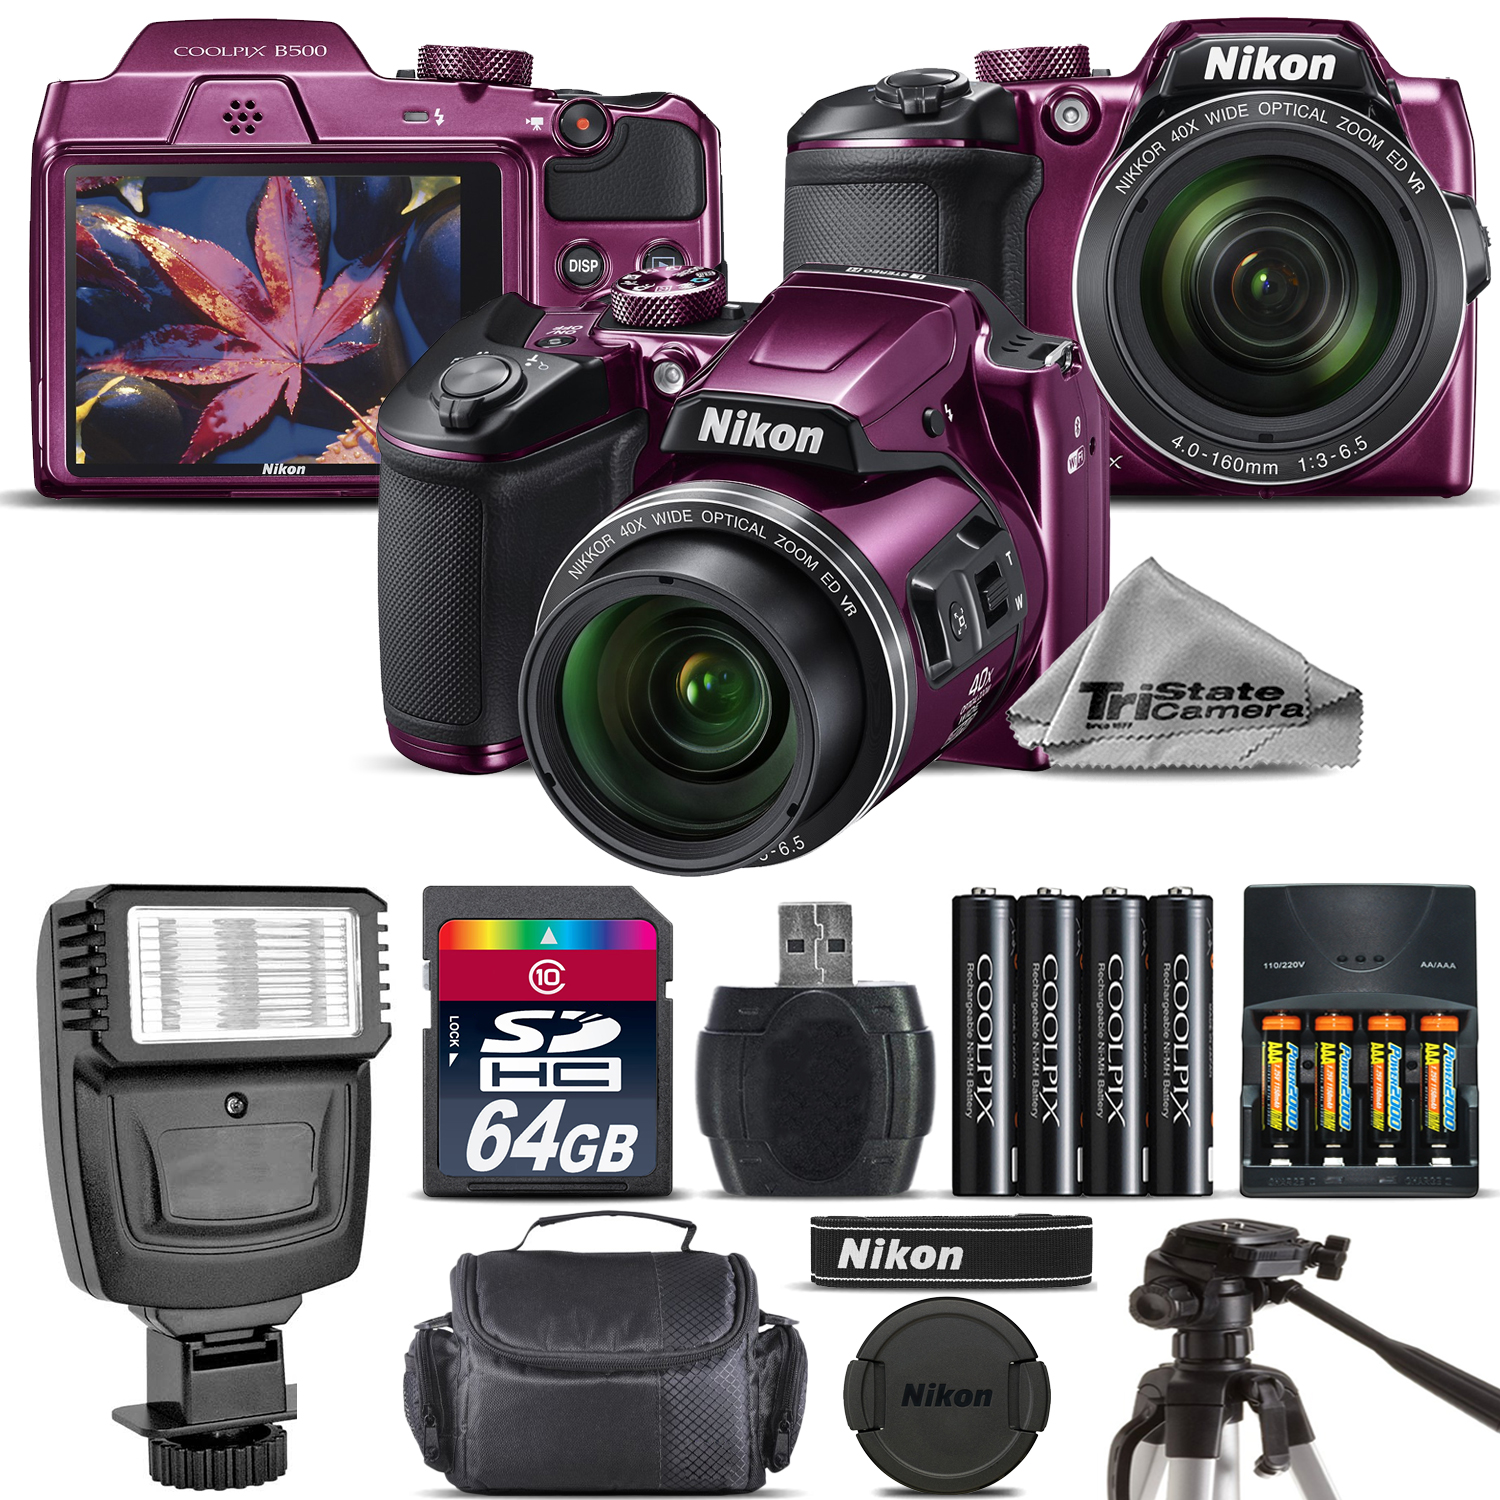 COOLPIX B500 Camera Plum 40x Zoom + Flash + Tripod + Case -64GB Kit Bundle *FREE SHIPPING*